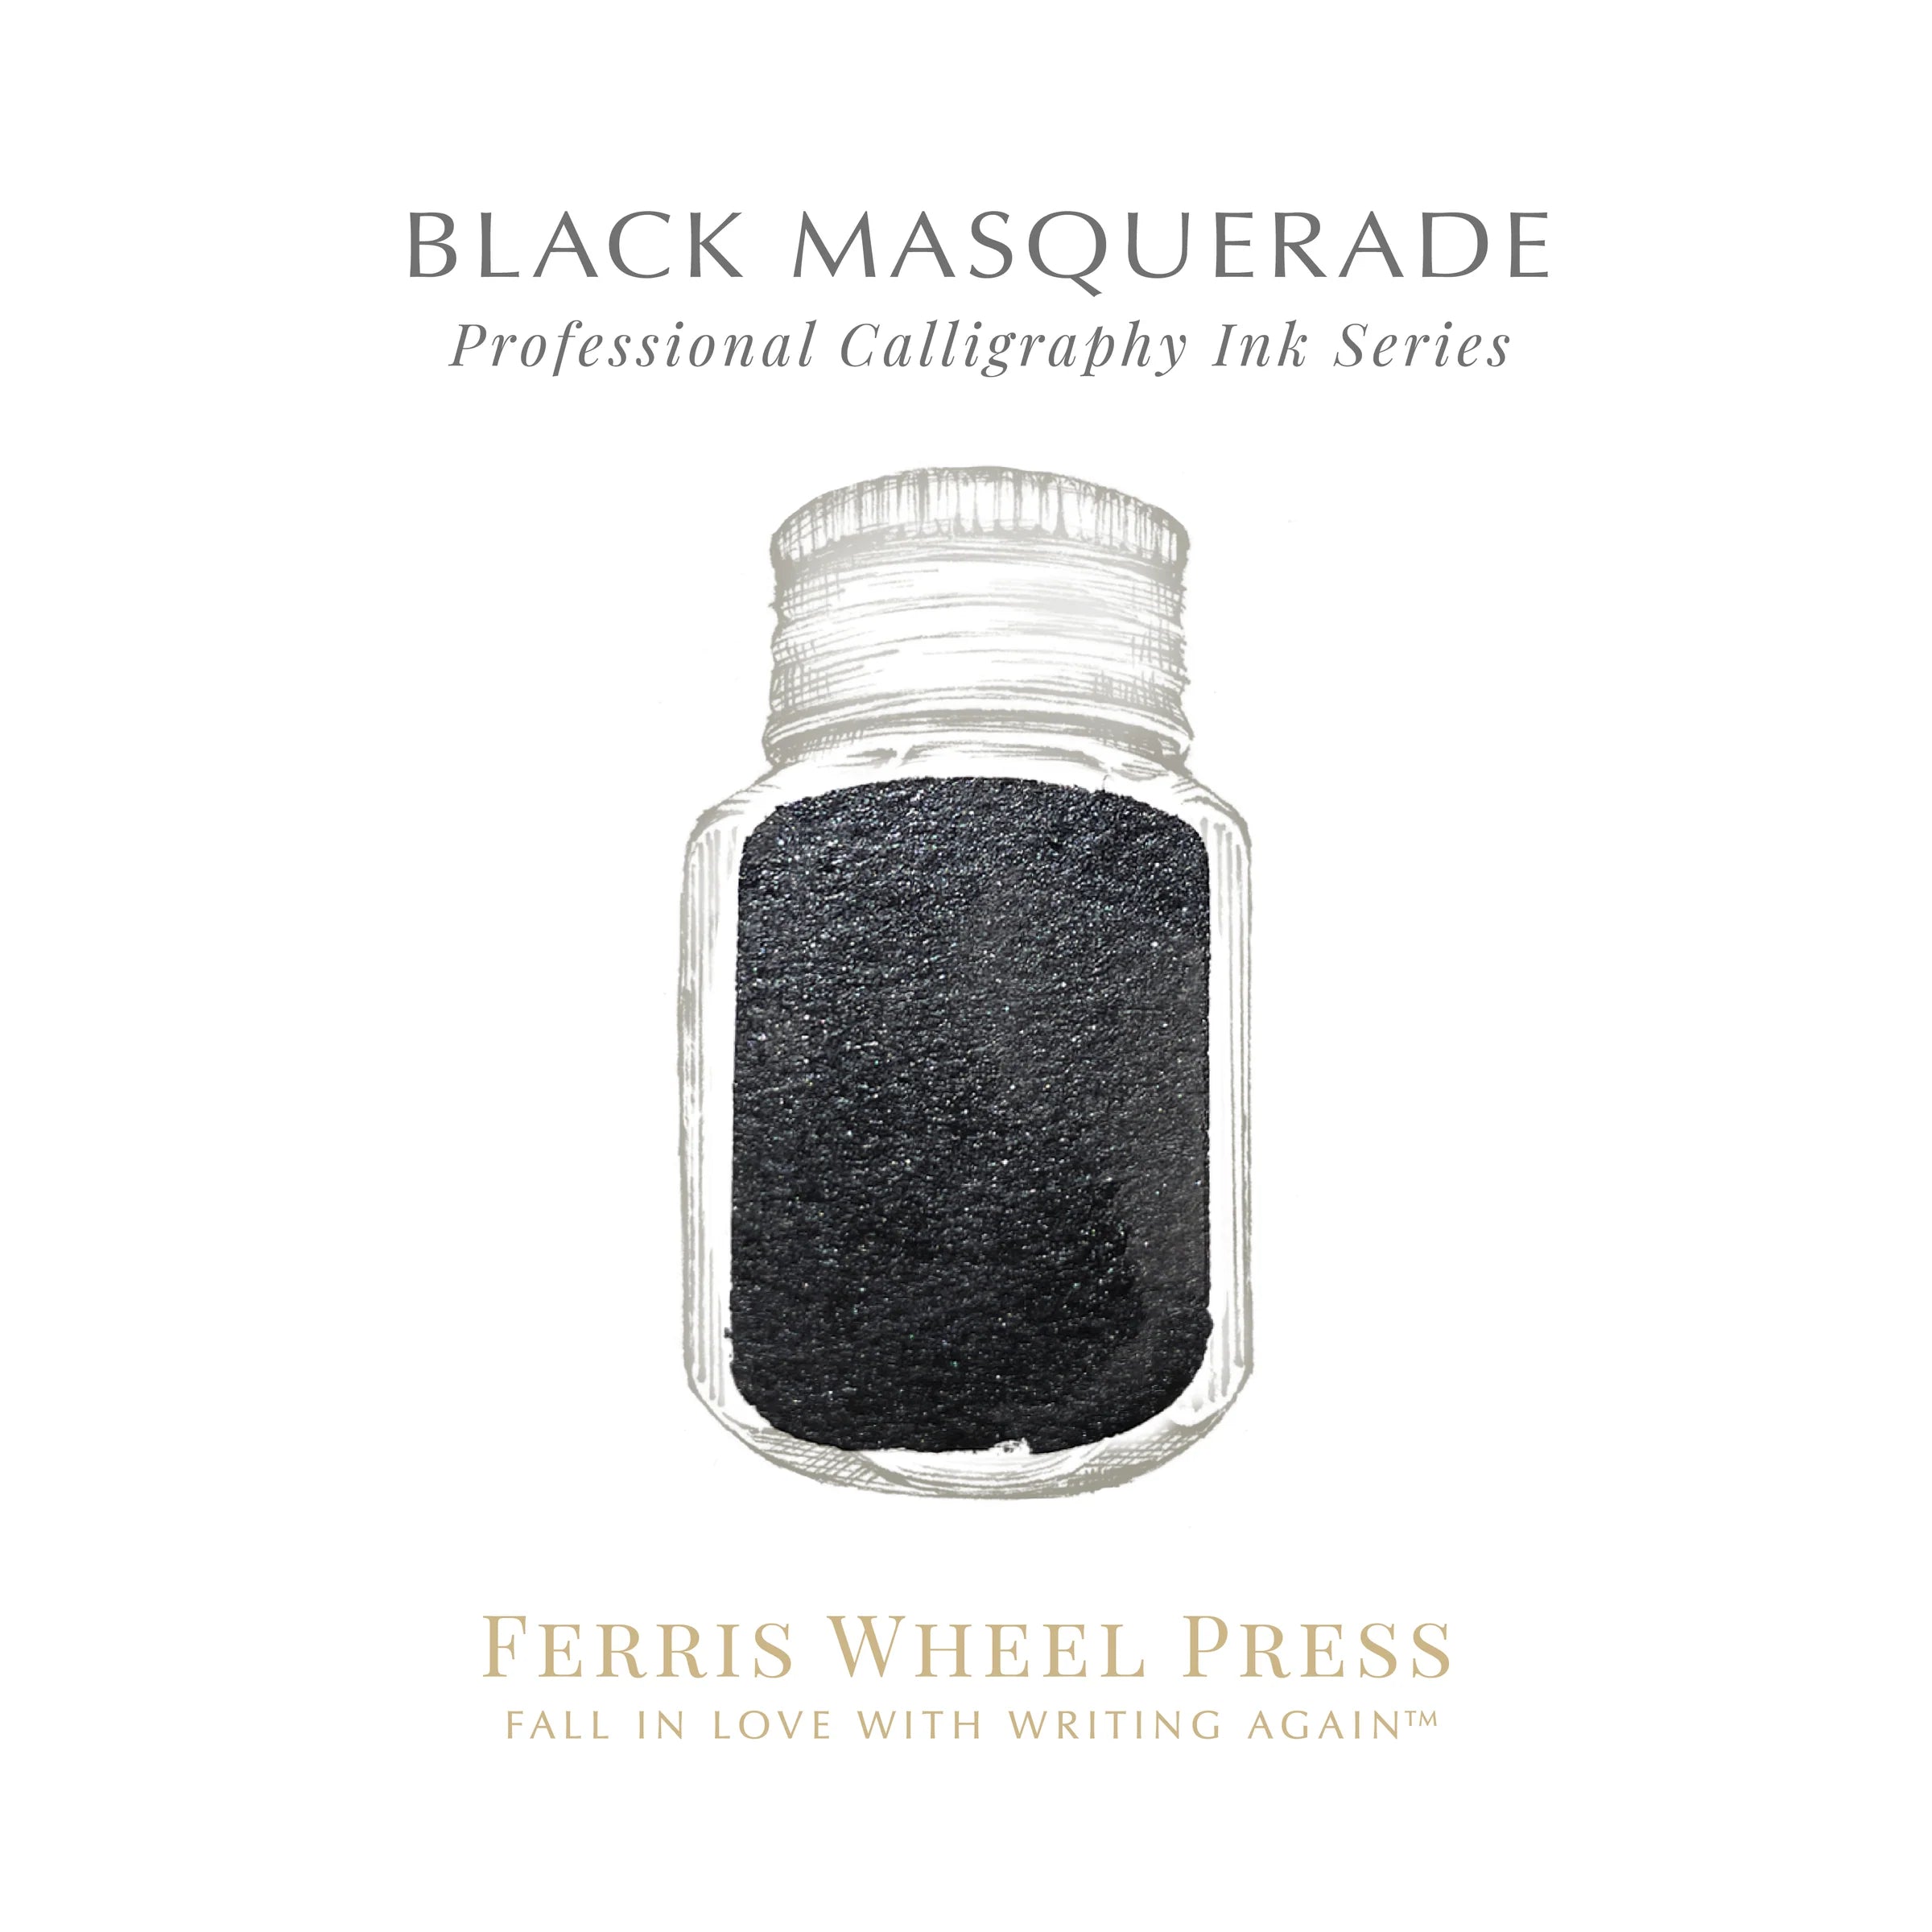 FERRIS WHEEL PRESS Calligraphy Ink 28ml Black Masquerade